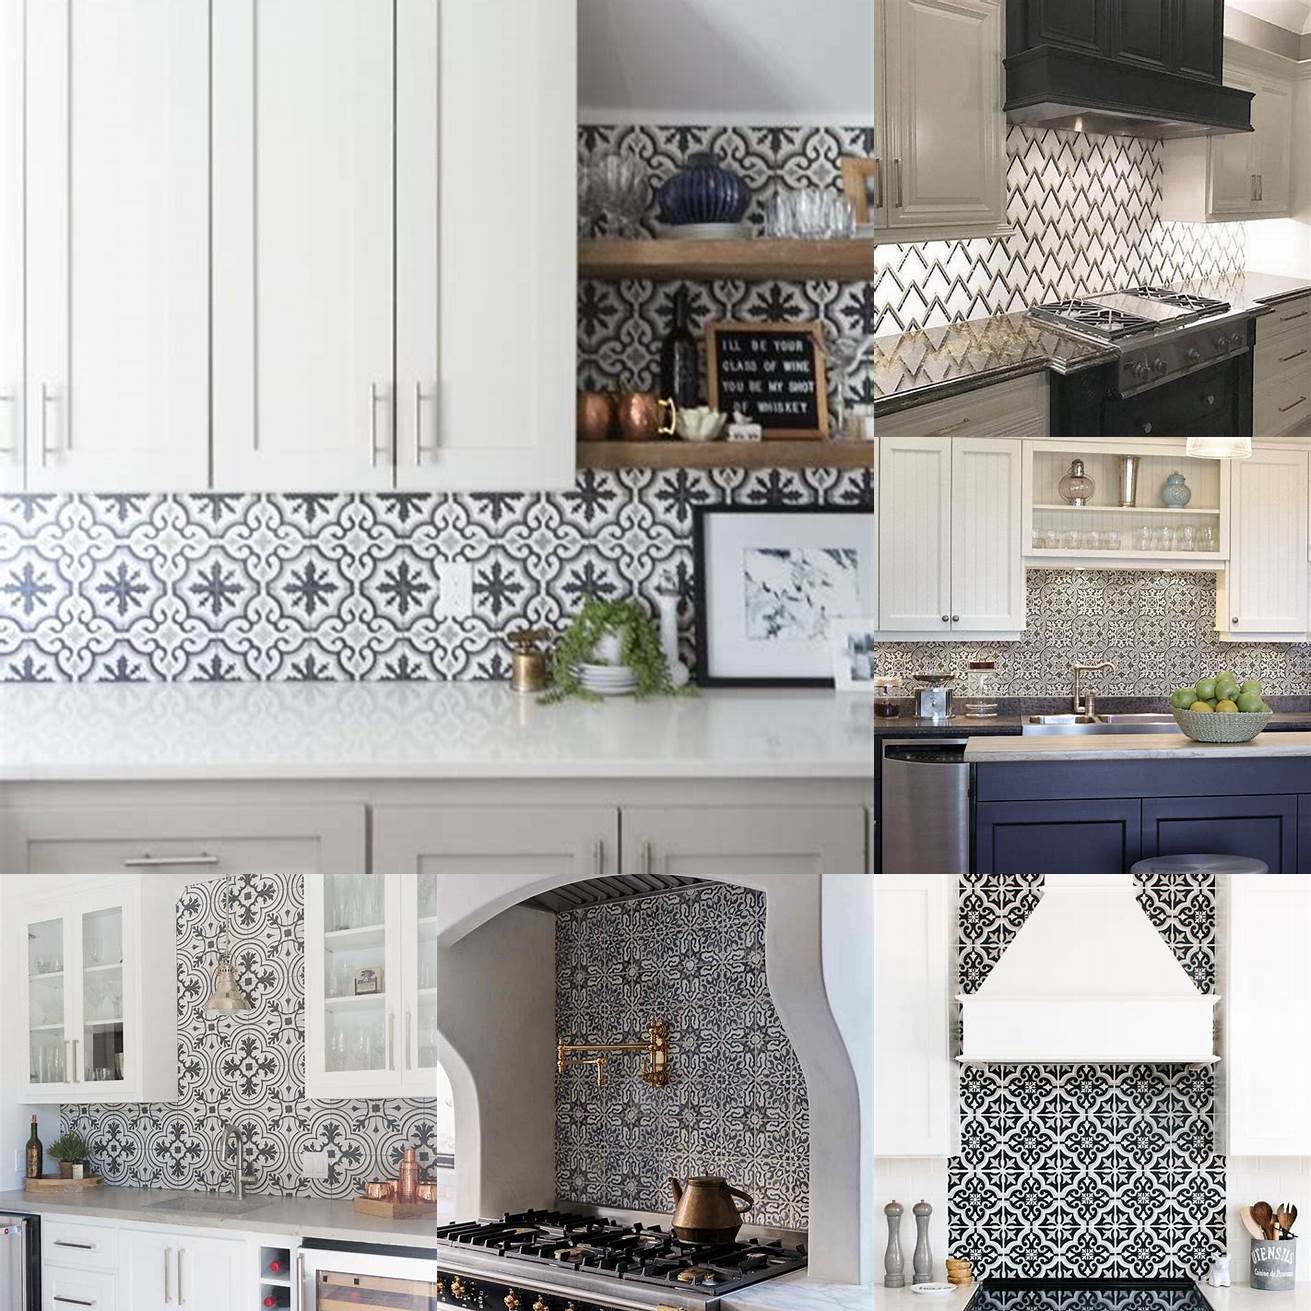 Black and white patterned tiles as backsplash and flooring